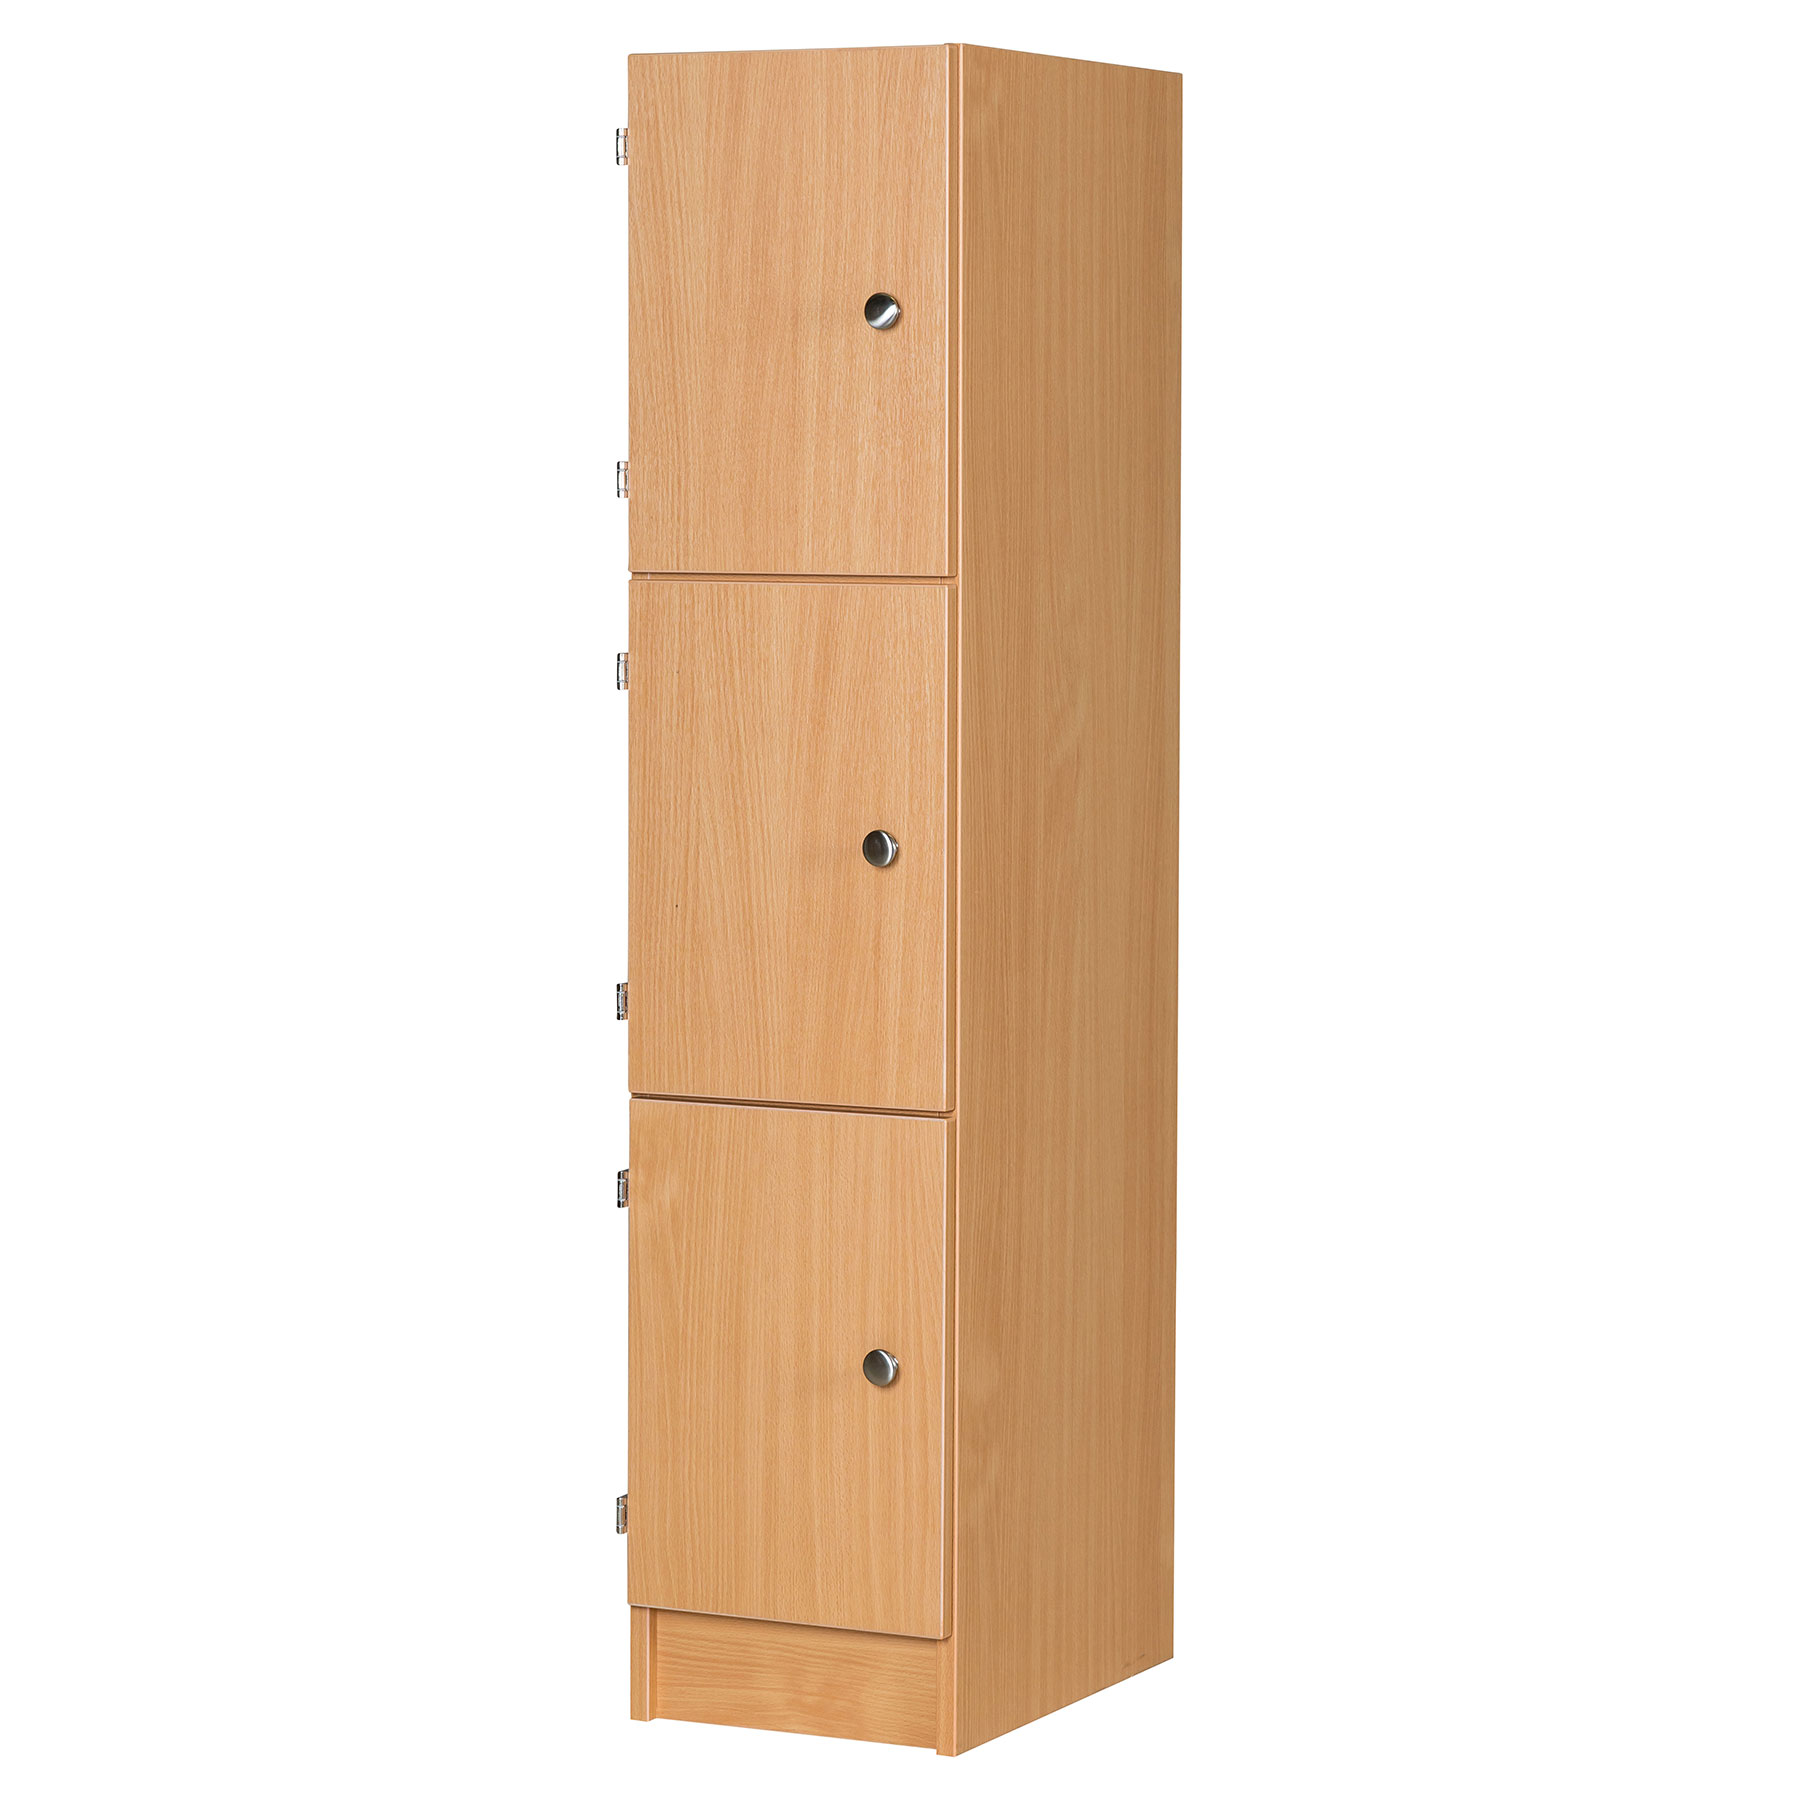 Three Door Wooden Locker (1370mm)